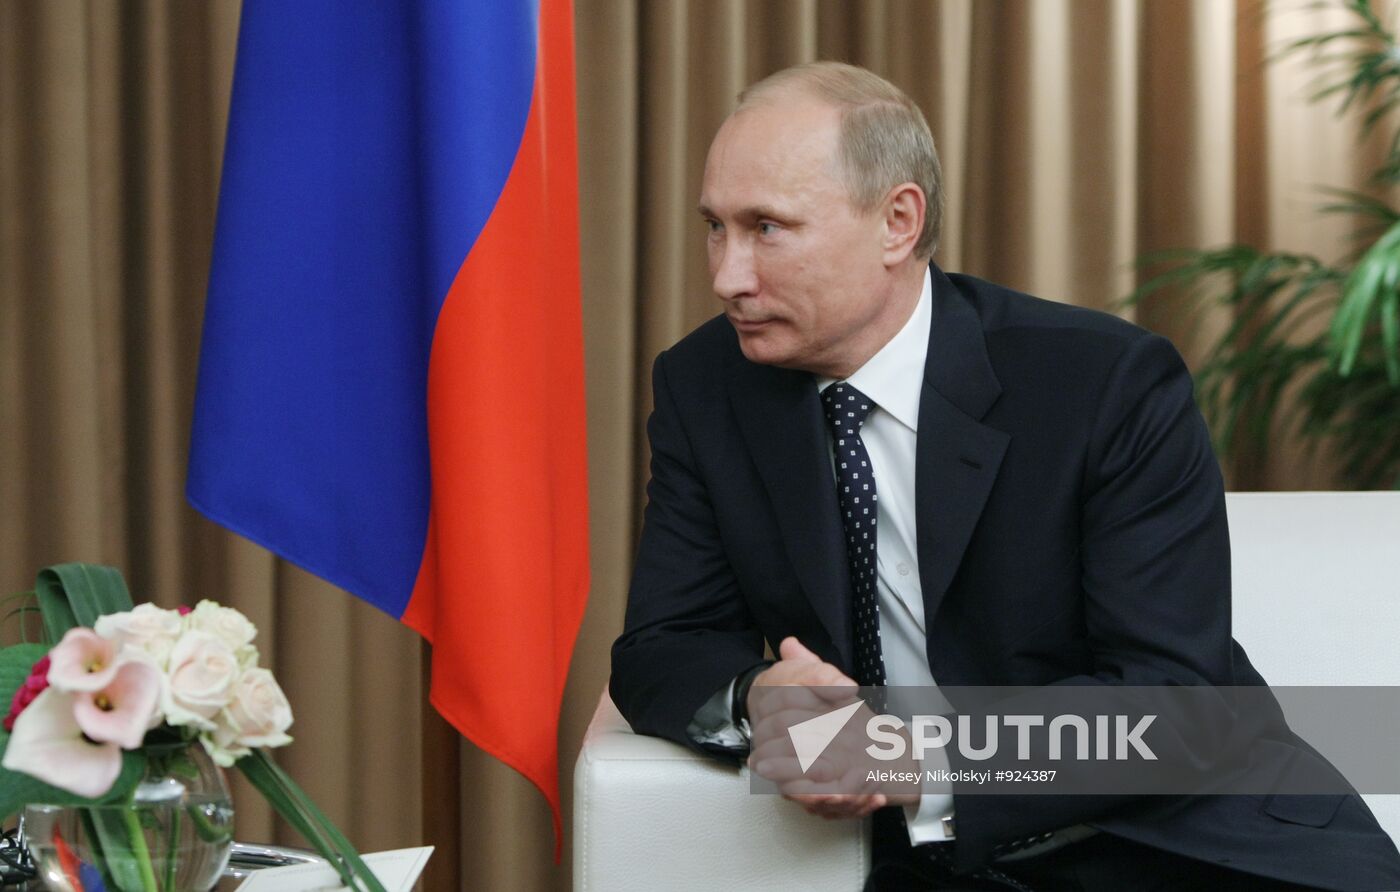 Prime Minister Vladimir Putin on working visit to Switzerland